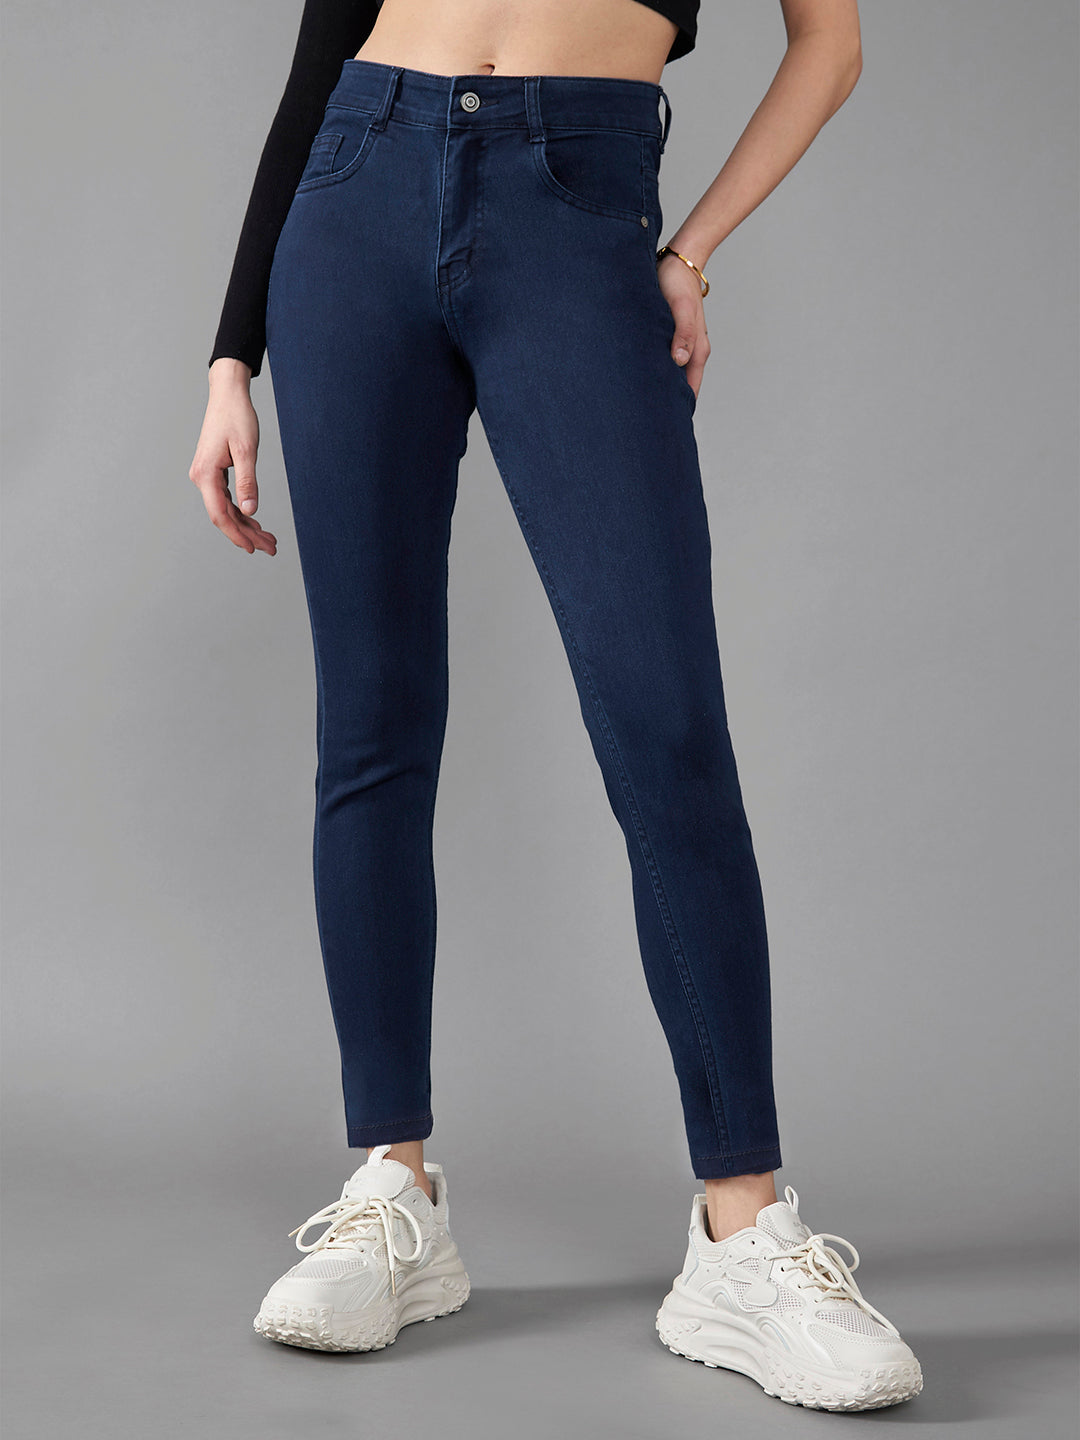 Women's Navy Blue Skinny Fit Mid Rise Regular Length Denim Stretchable Jeans